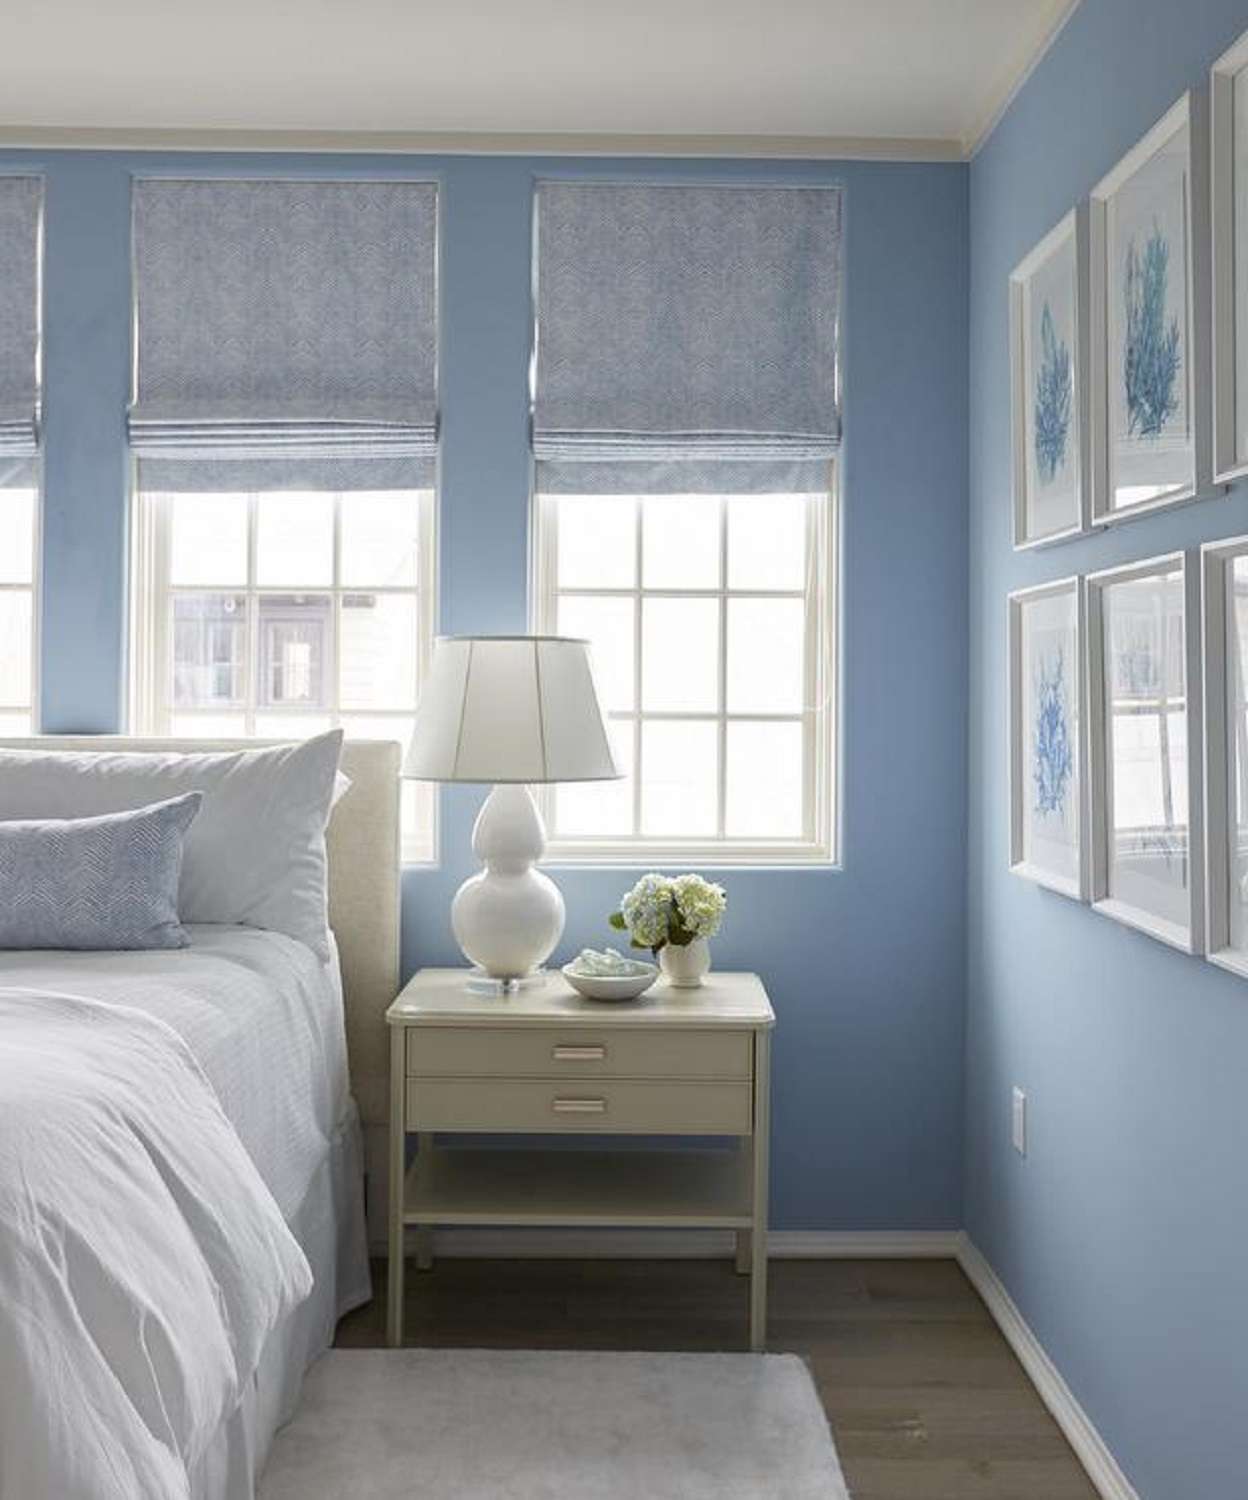 Cornflower blue bedroom walls